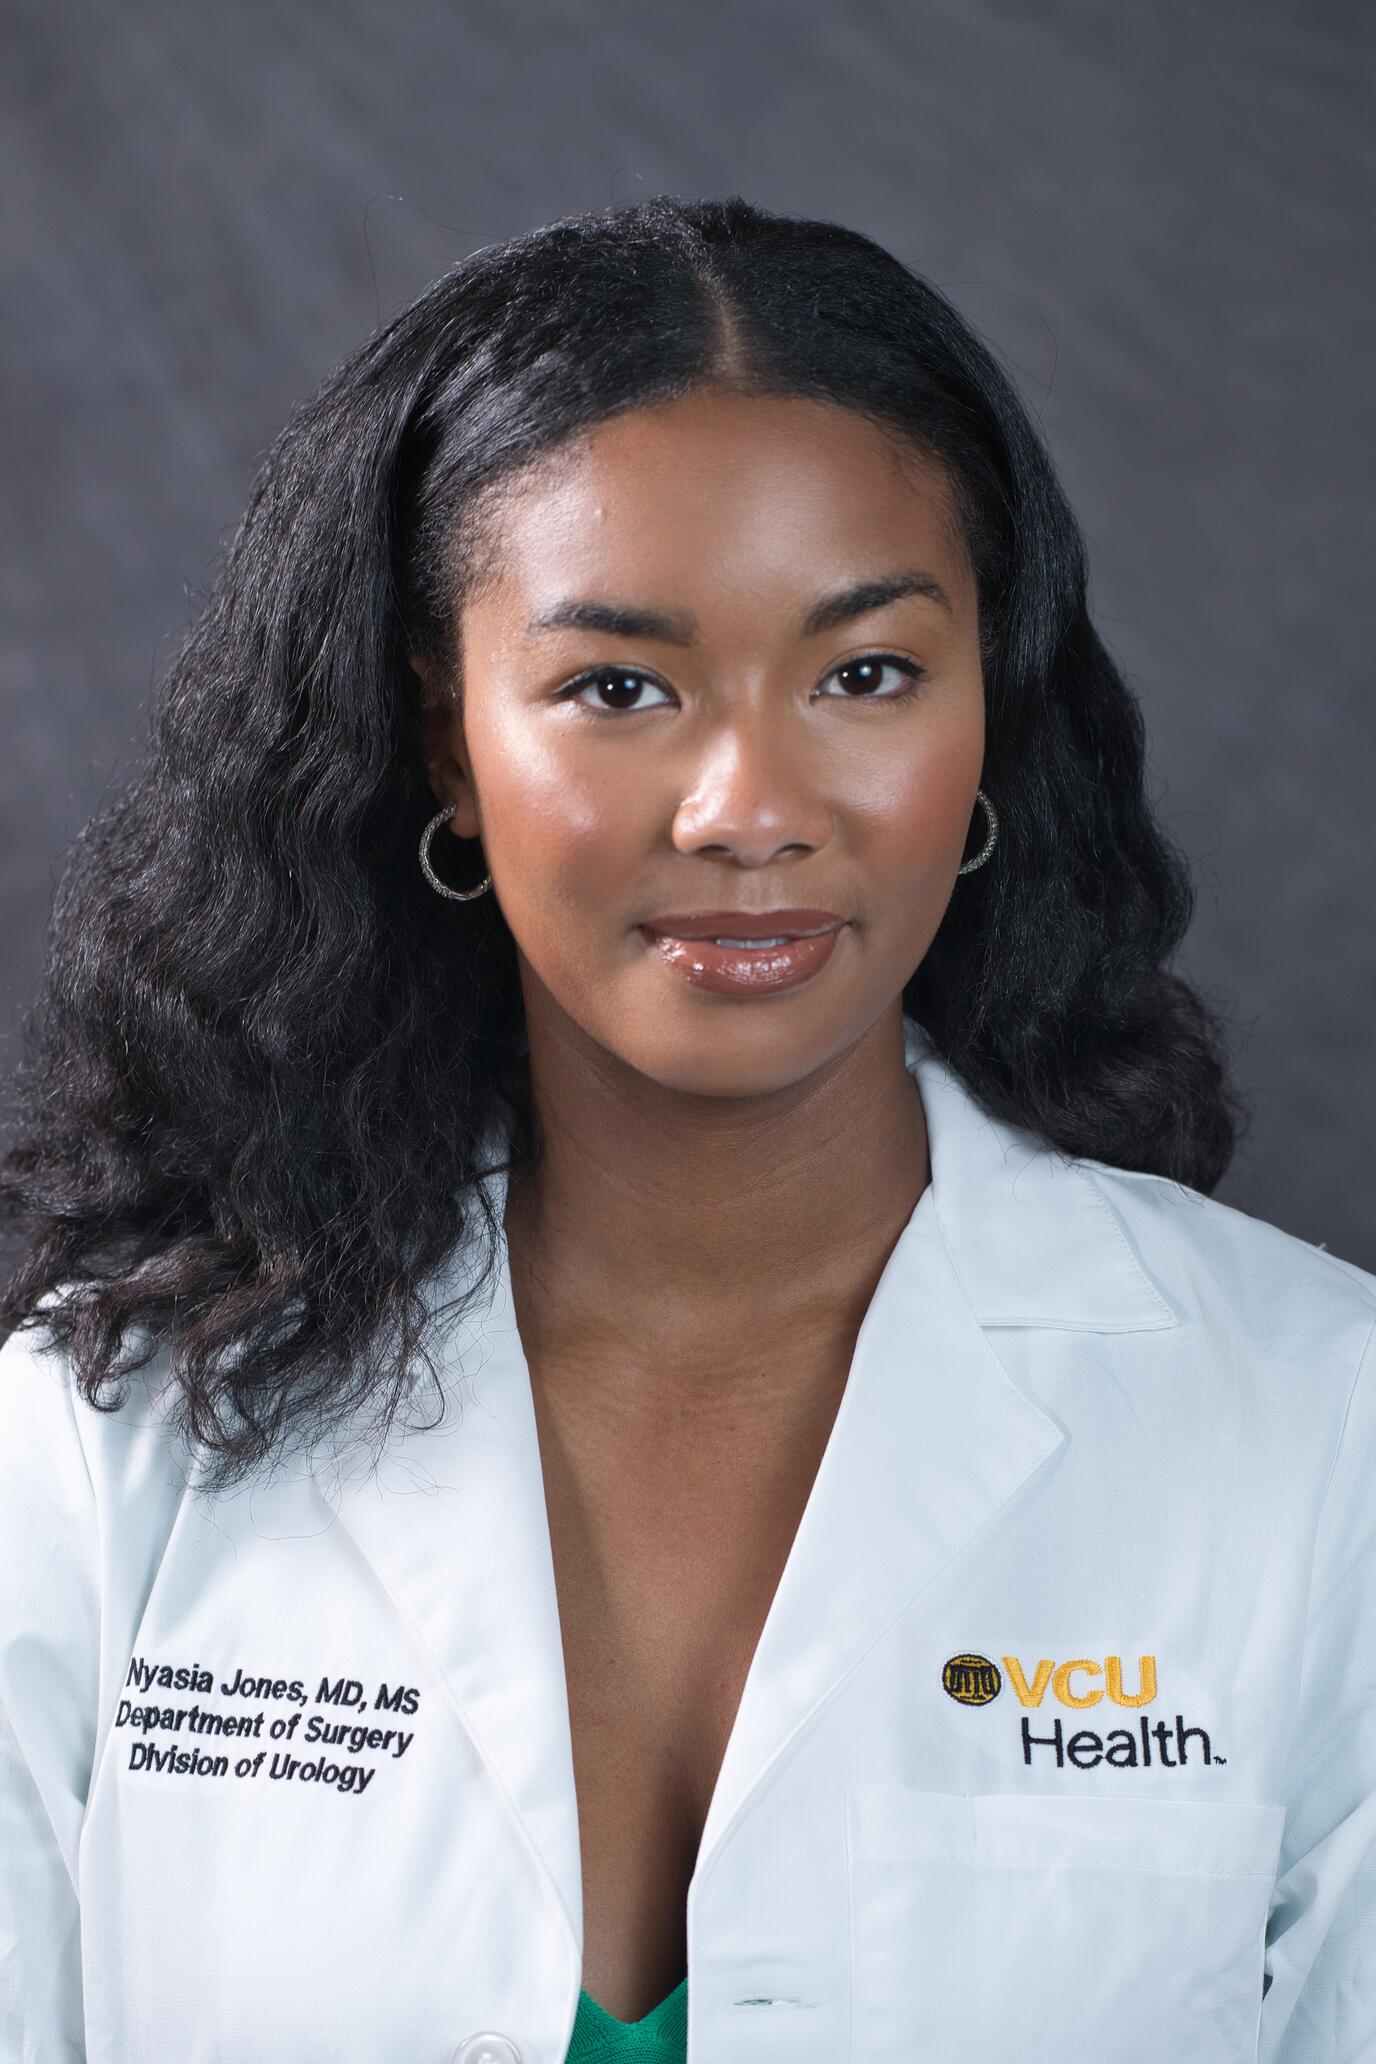 Nyasia Jones, MD